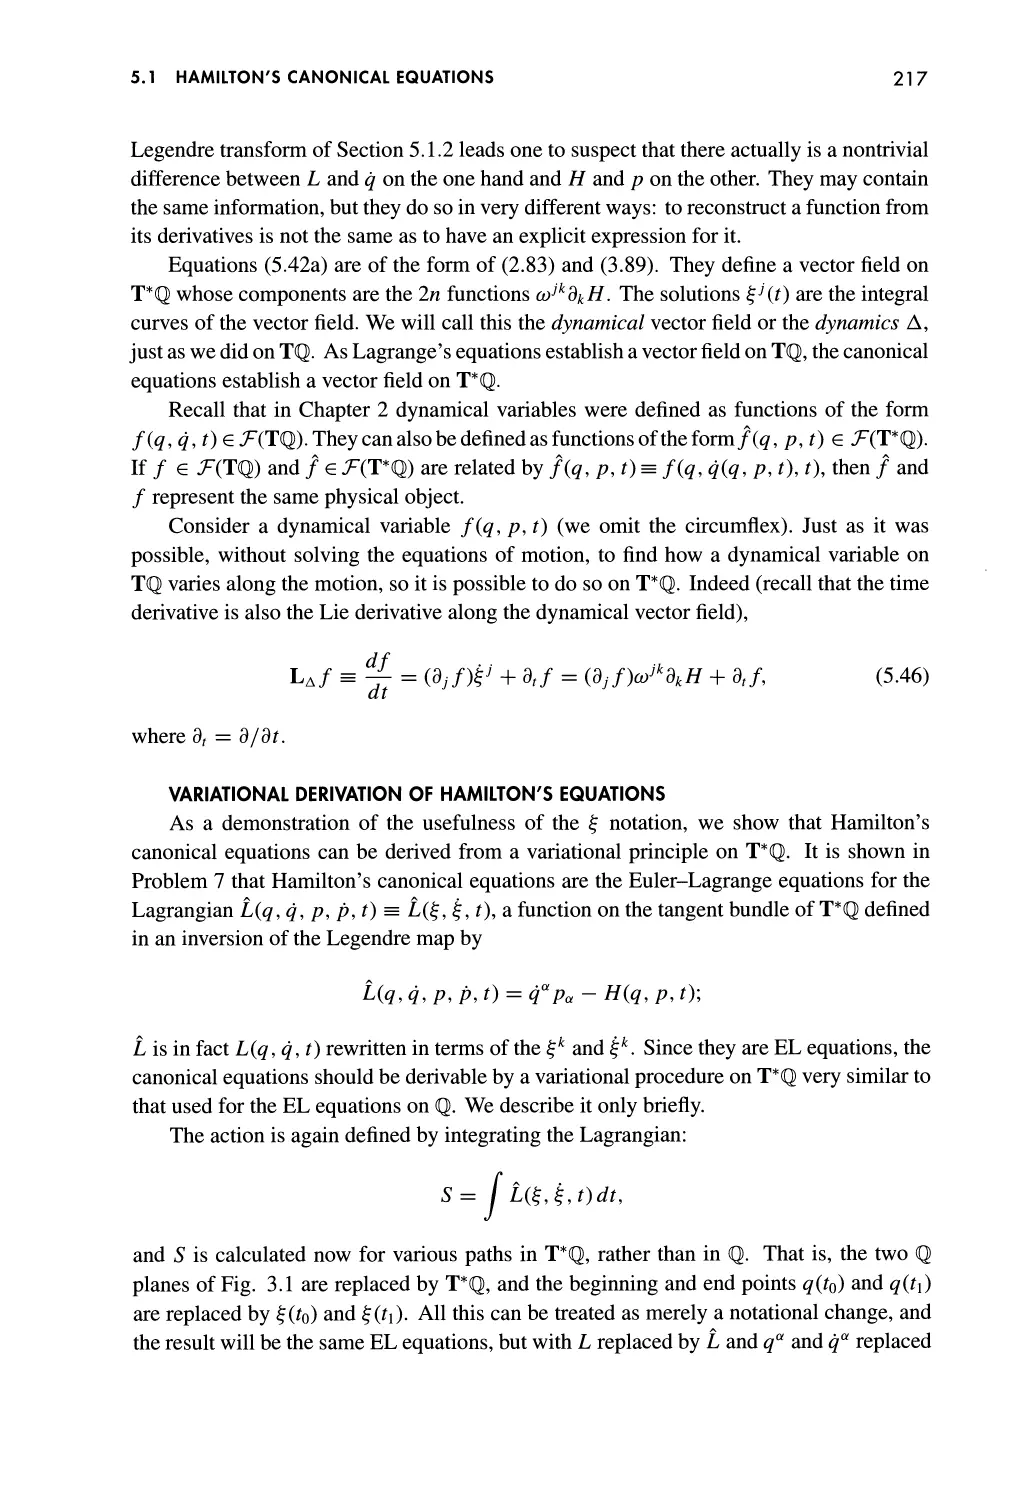 Variational Derivation of Hamilton's Equations